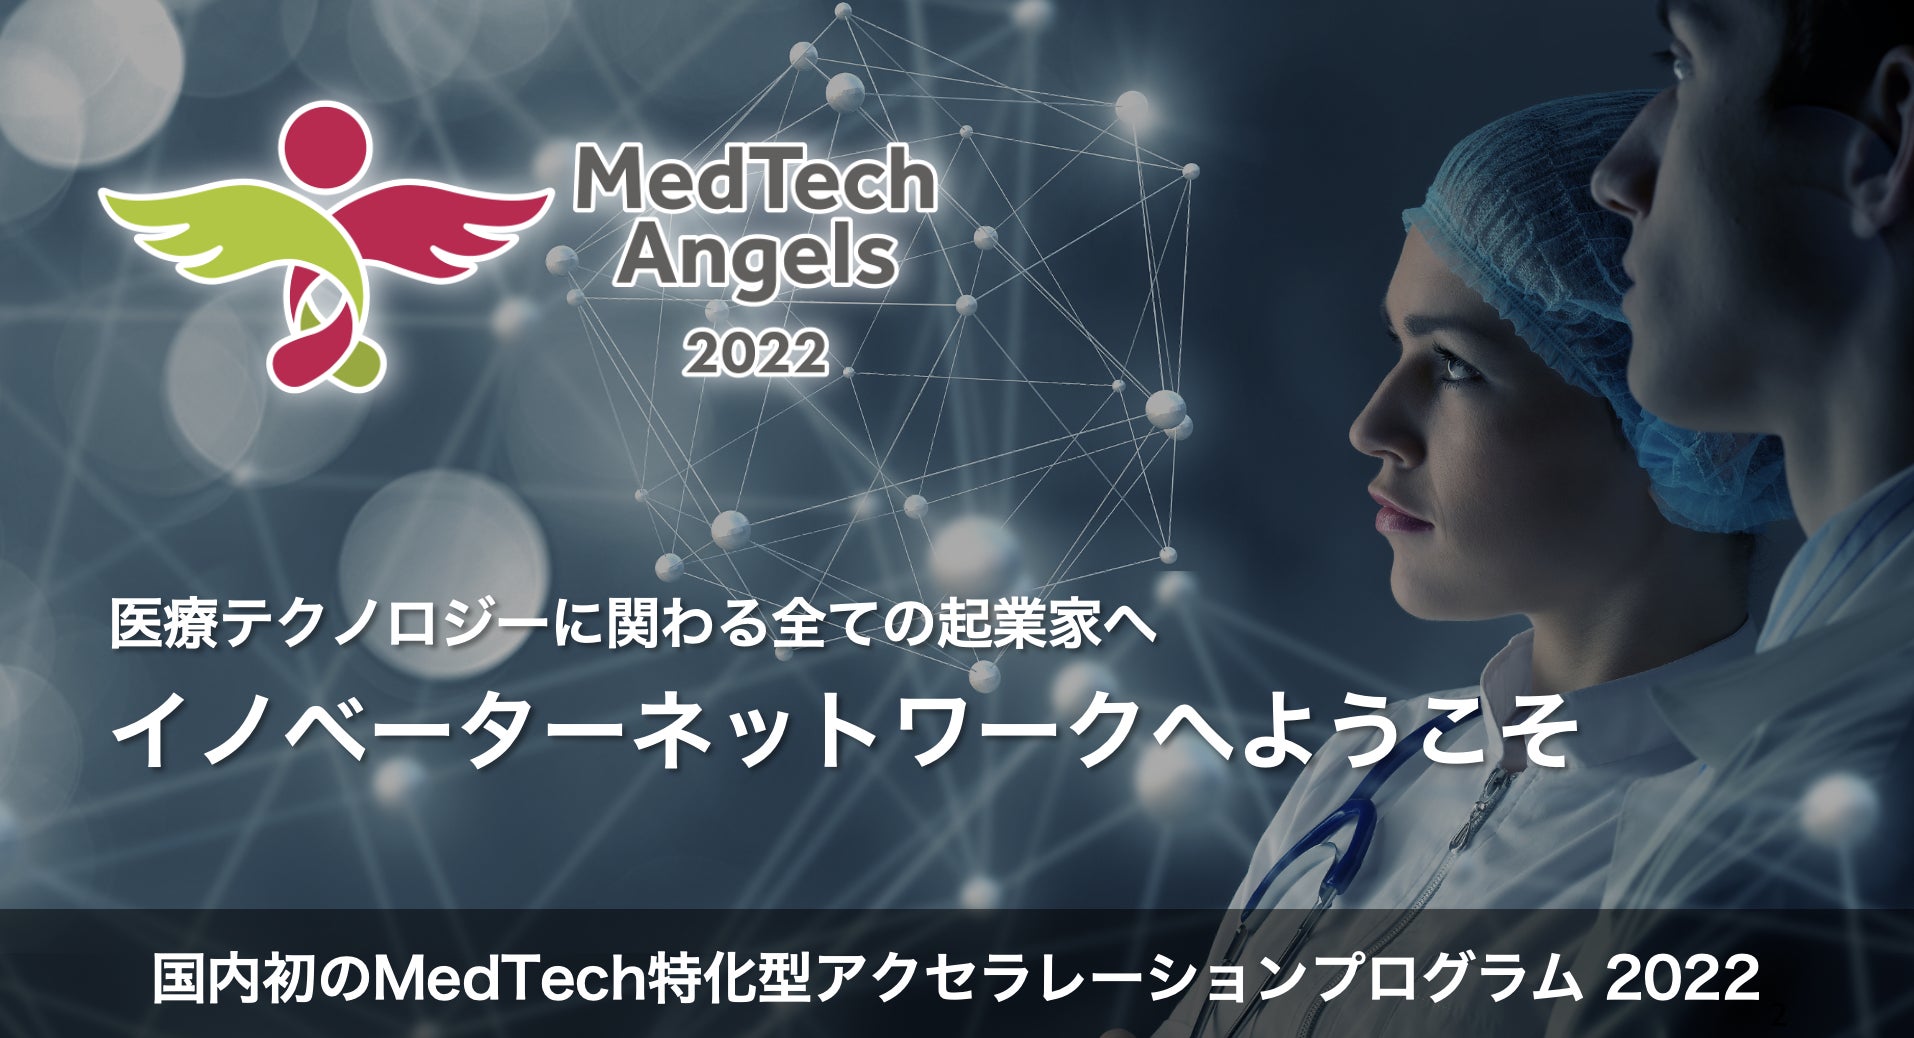 【MedTech Angels 2022】デジタルヘルス・医療機器・人工知能に関連するMedTechスタートアップを募集中！